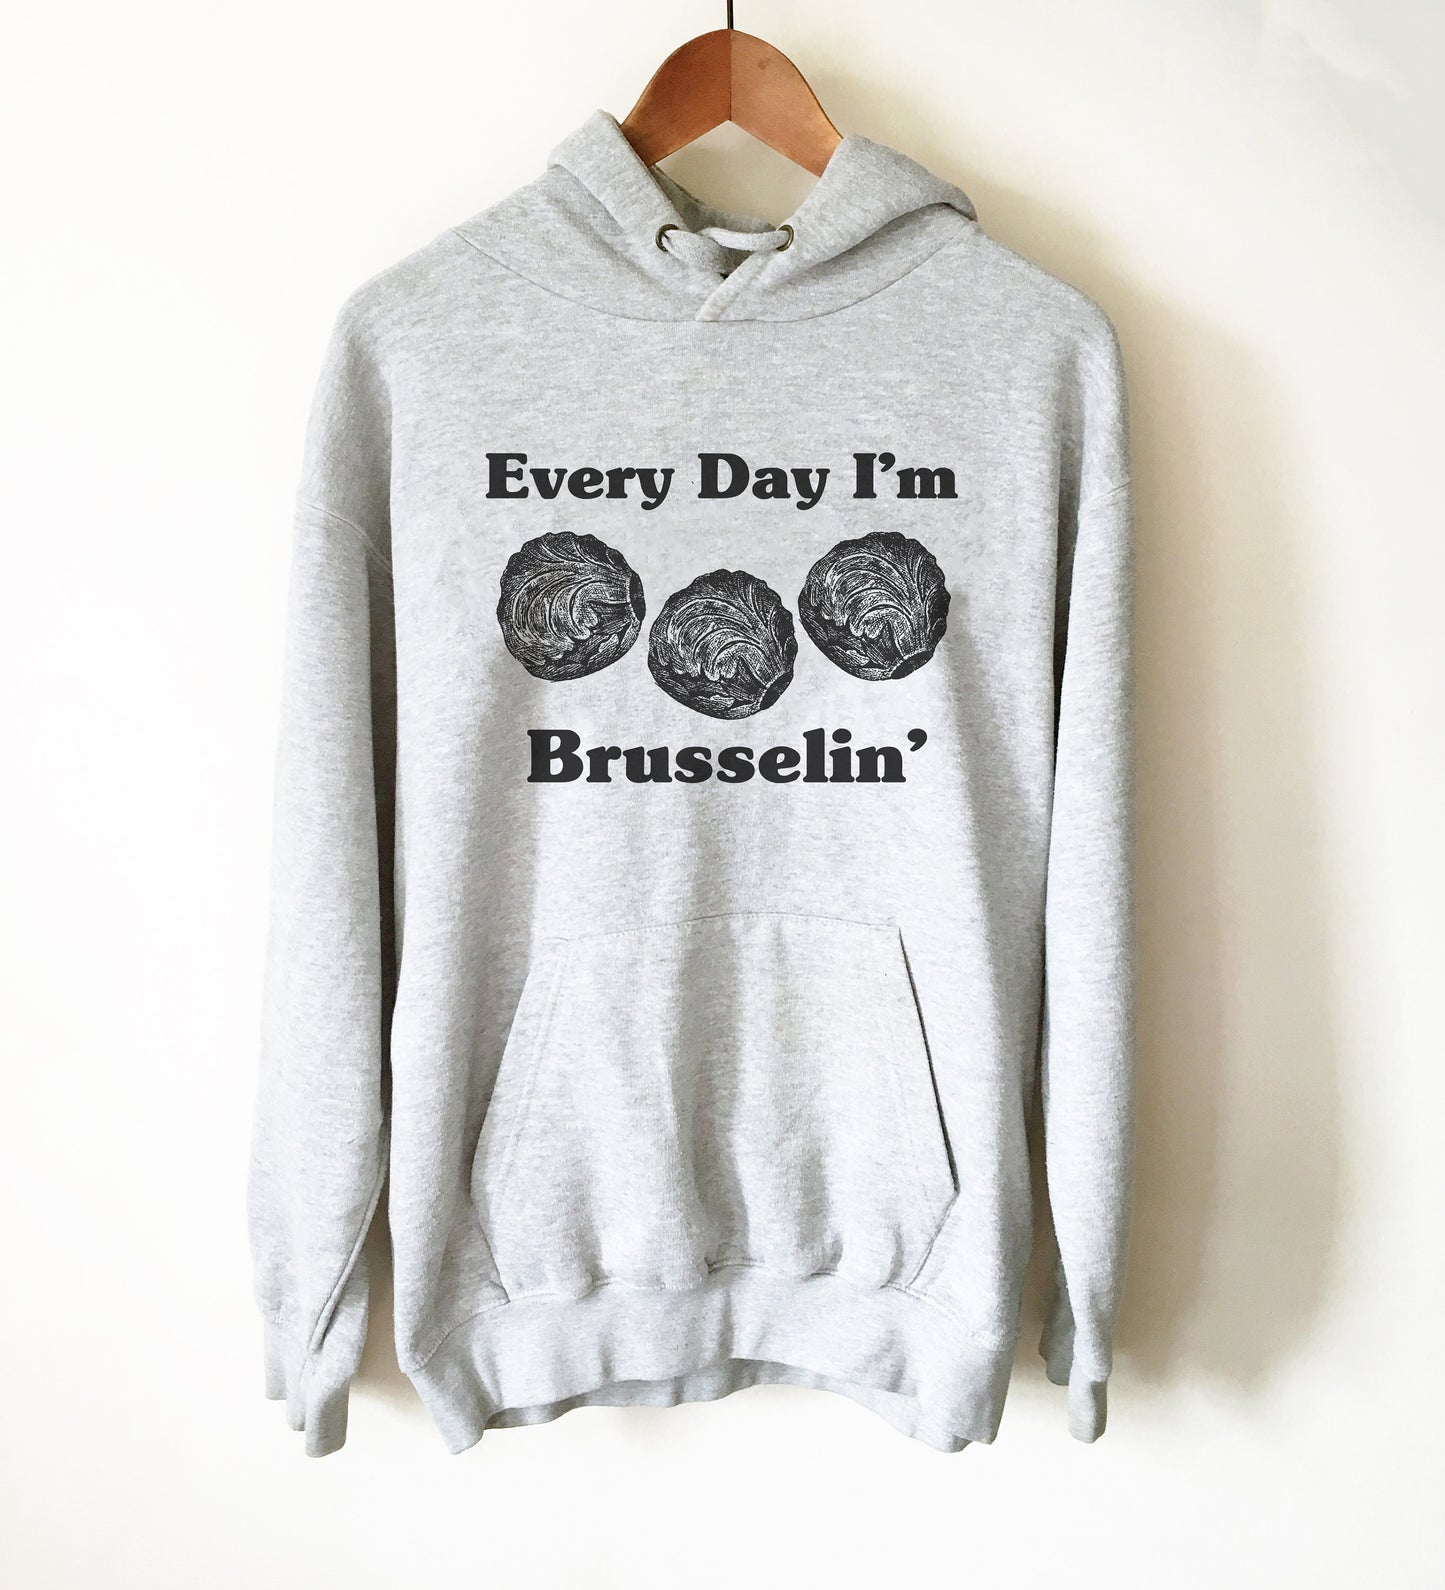 Every Day I'm Brusselin' Hoodie - Vegan Shirt, Vegetarian Shirt, Vegetable TShirt, Vegan Gift, Vegetarian Gift, Gardening Shirt